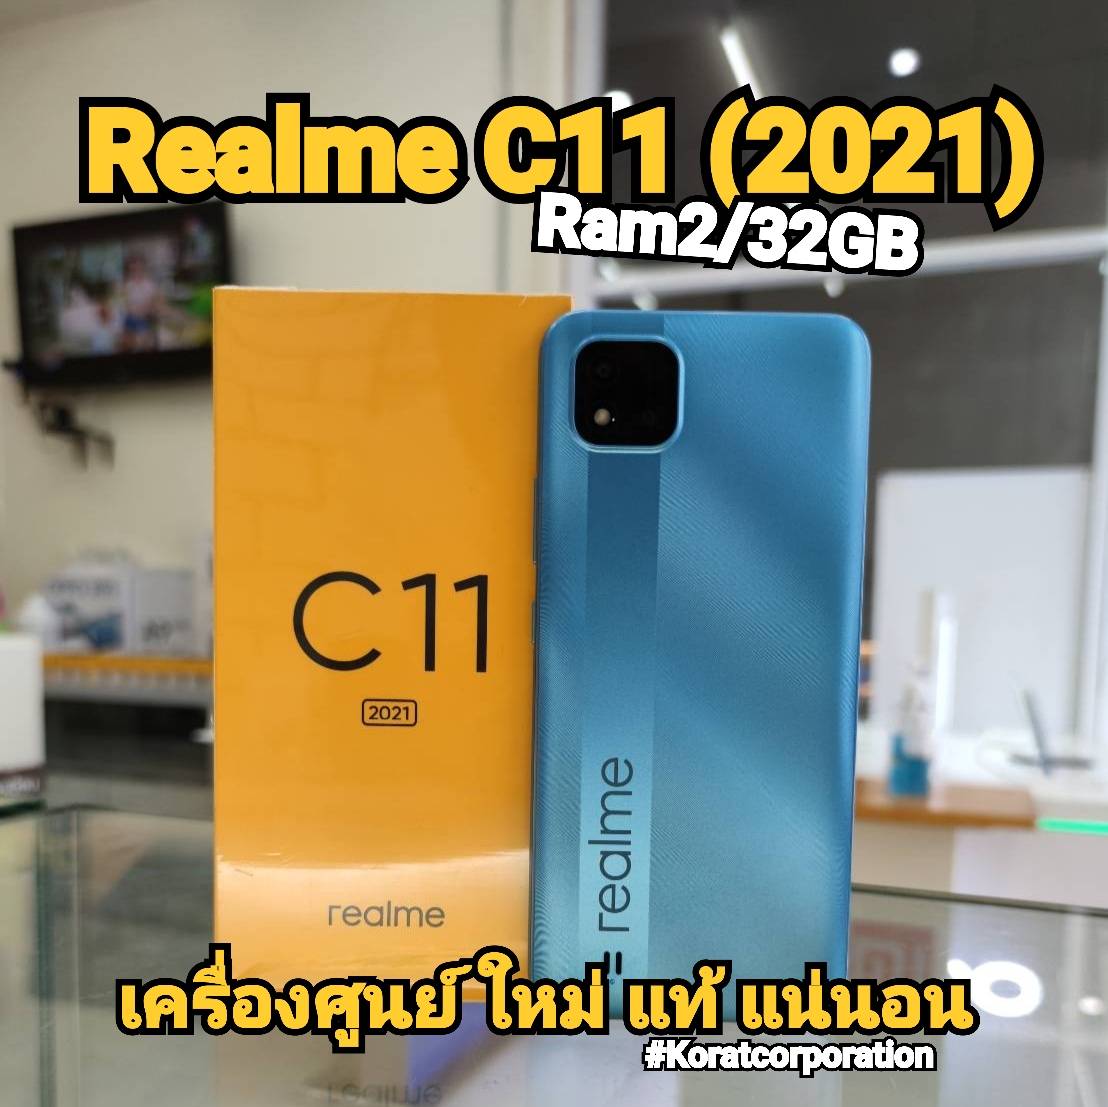 Realme C11 2021 (ram2 / 32GB) สุดประหยัด